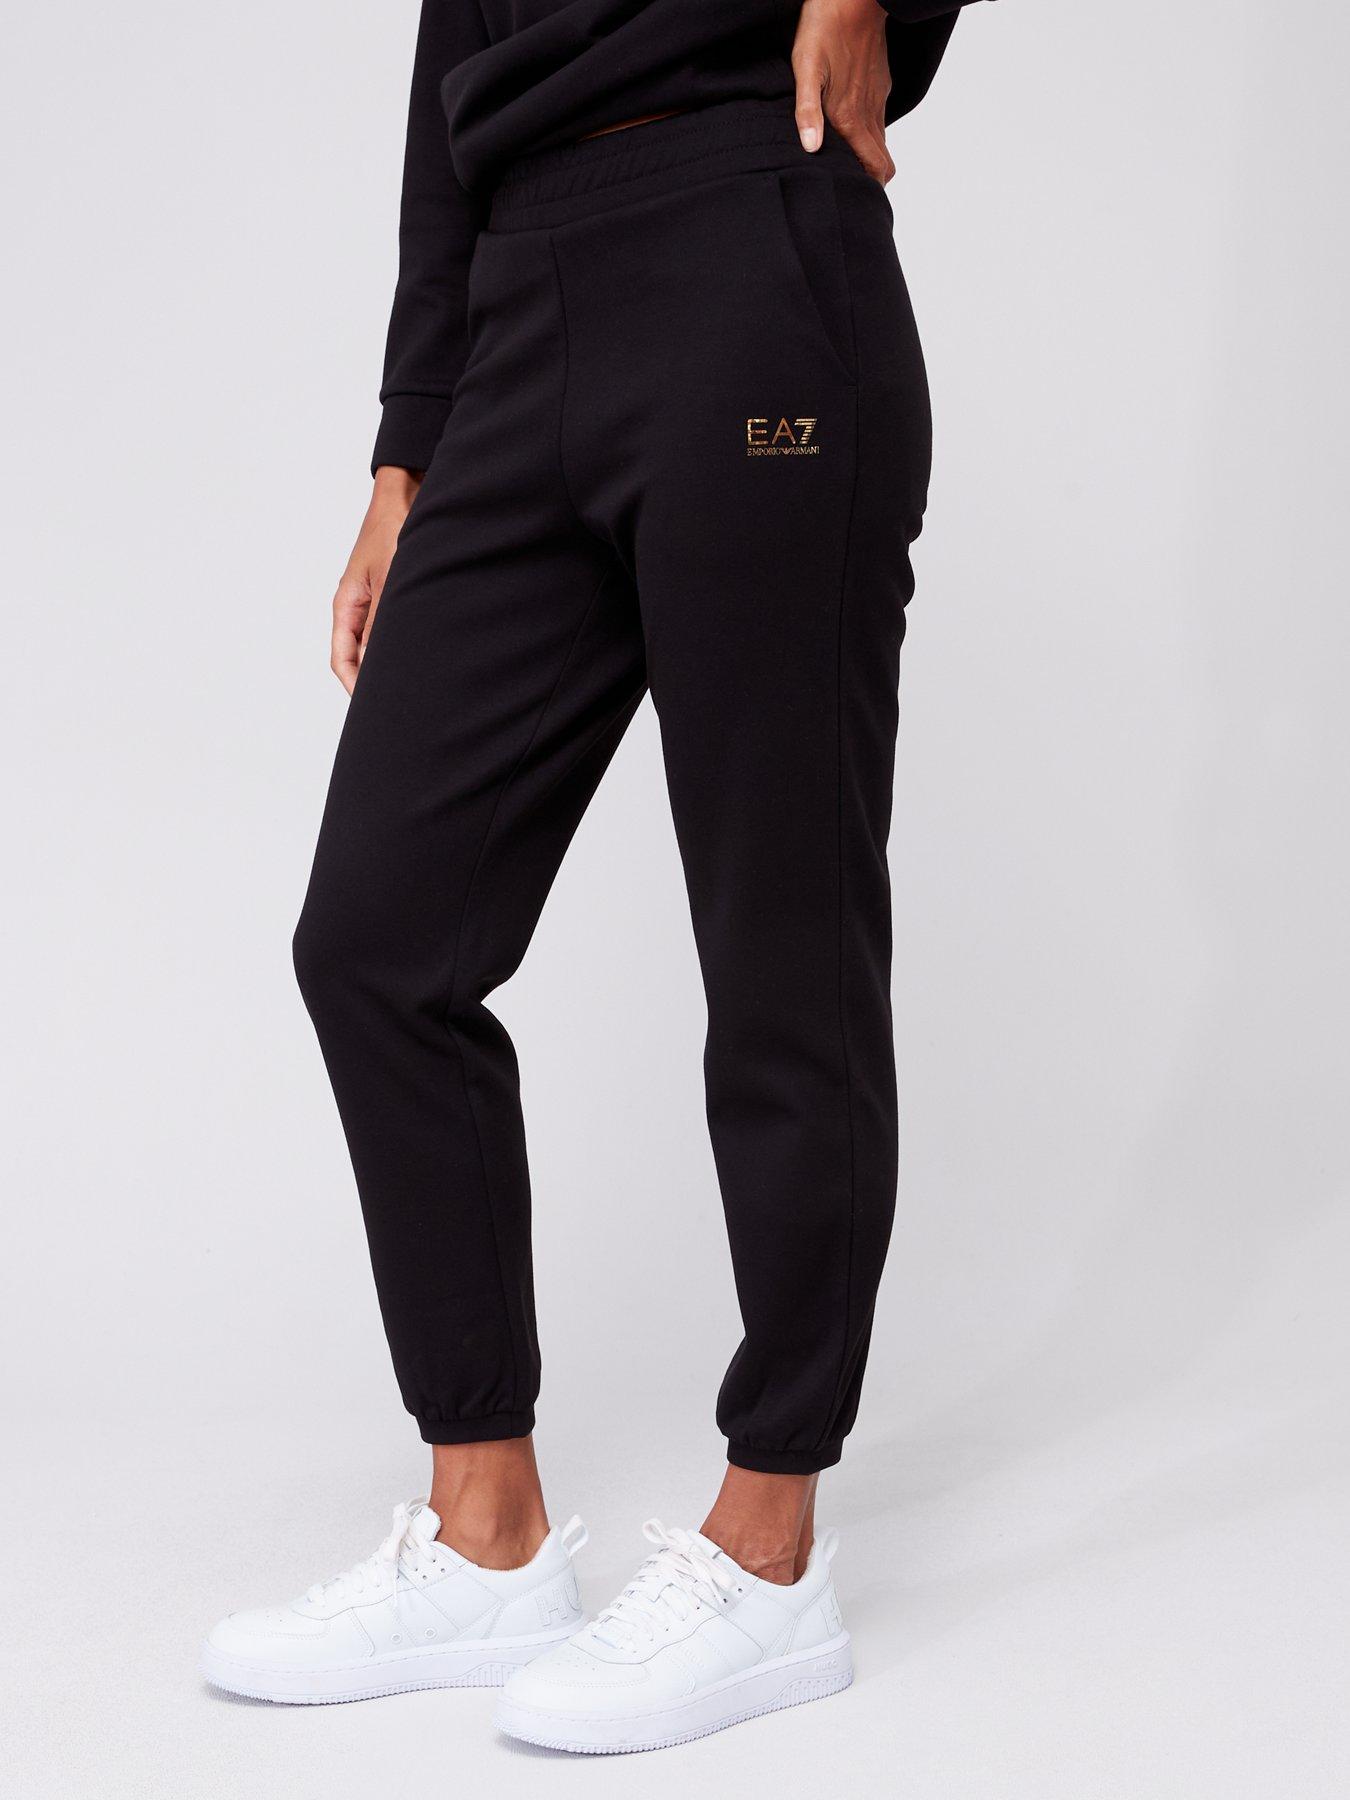 Ea7 emporio armani, Trousers & leggings, Women